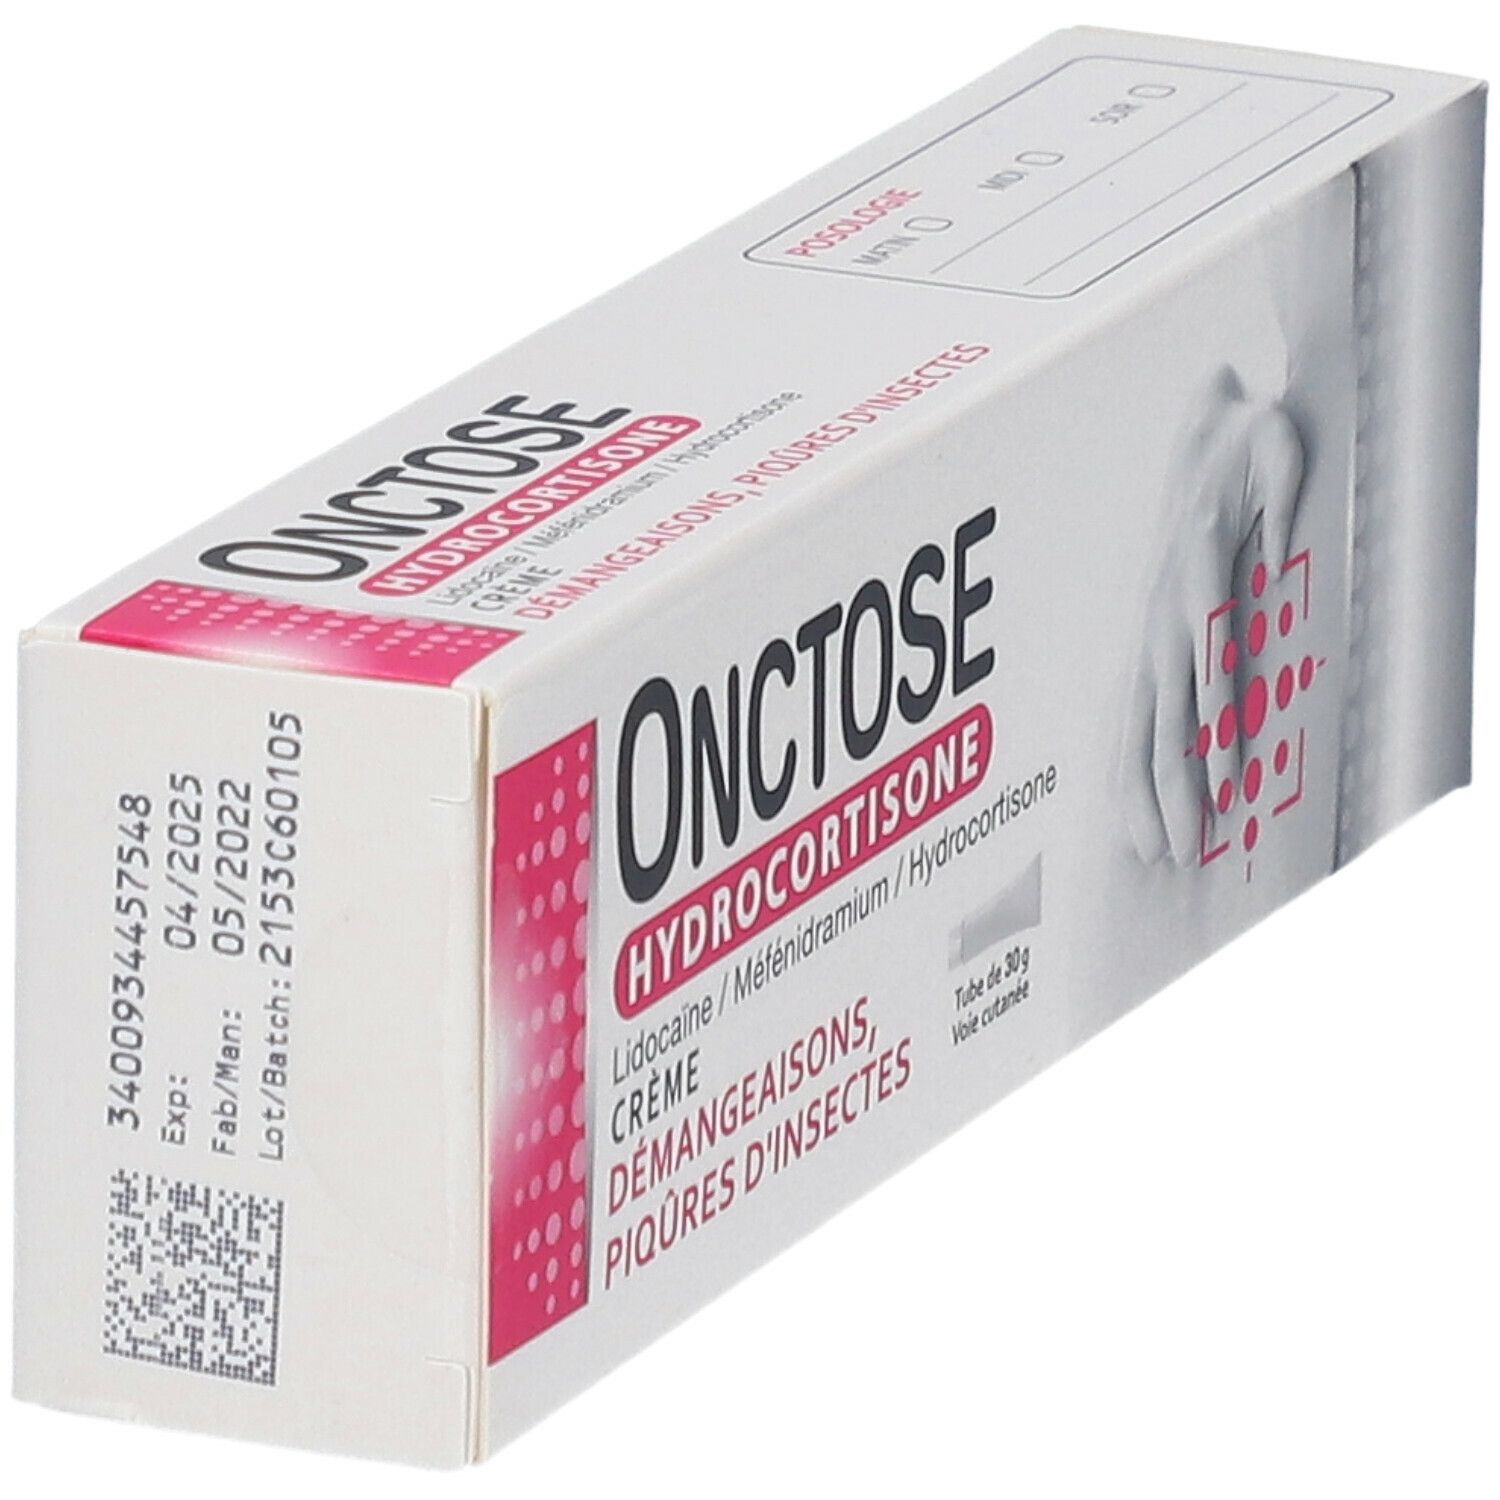 Merck Onctose Hydrocortisone